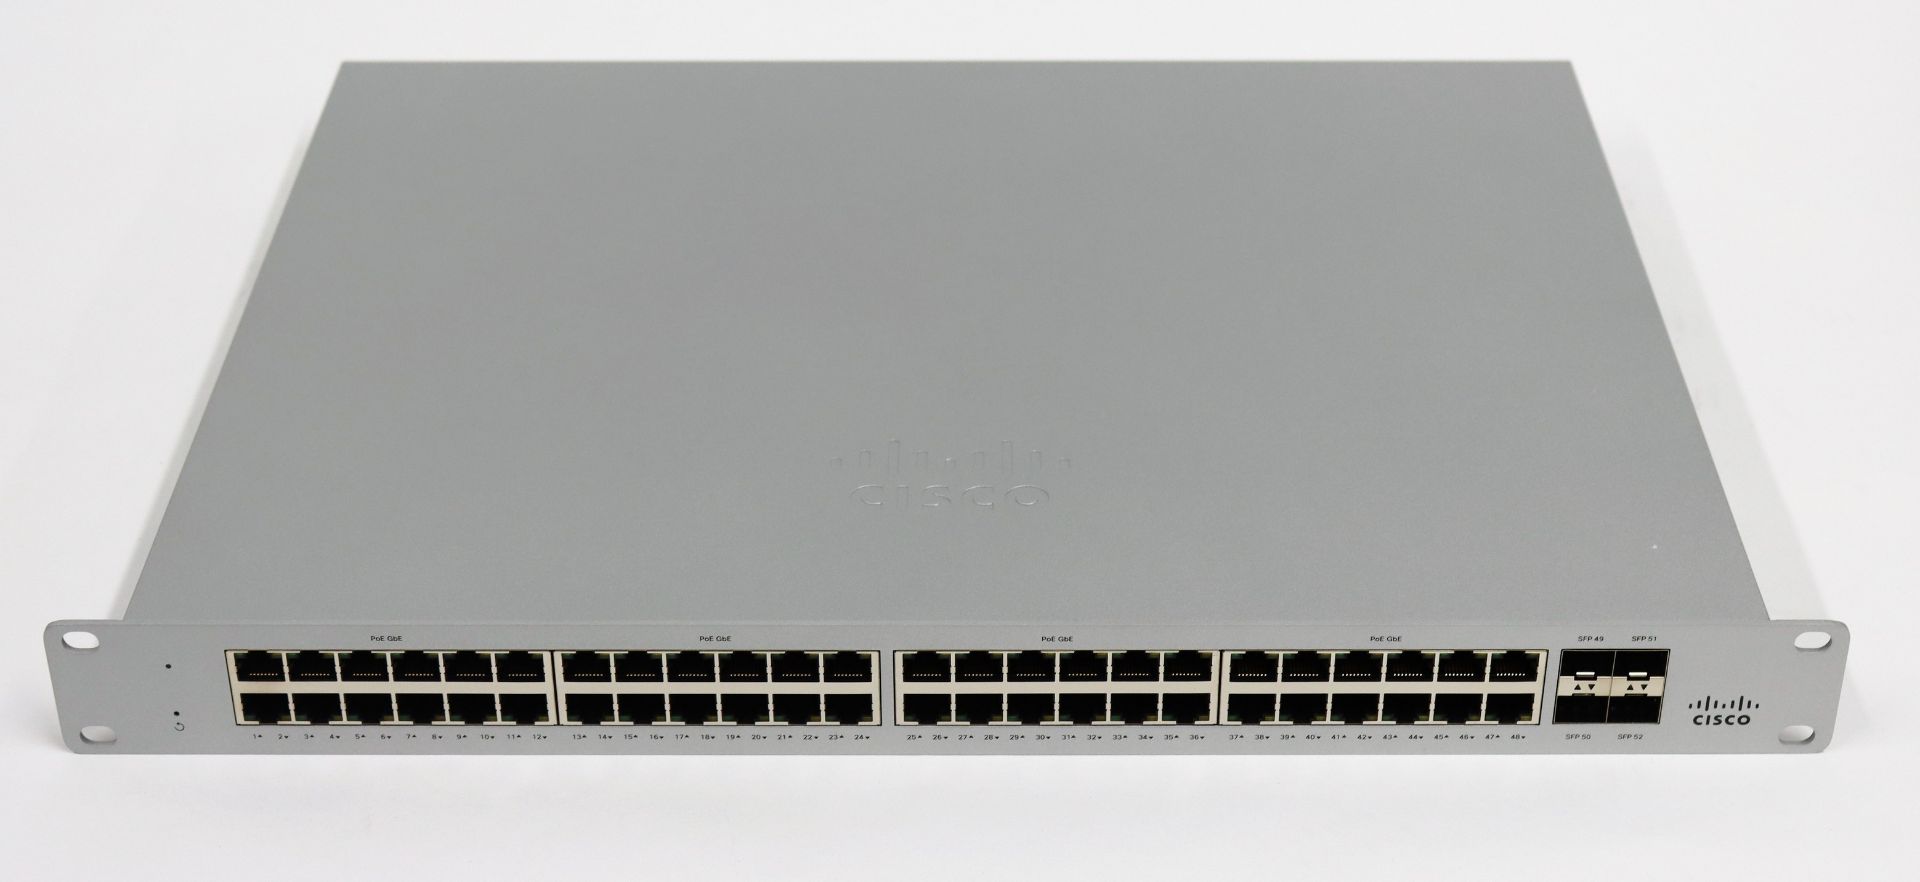 A boxed as new Cisco Meraki MS120-48FP 48-Port PoE Cloud Managed Gigabit Switch (P/N: A90-61800 M/N: